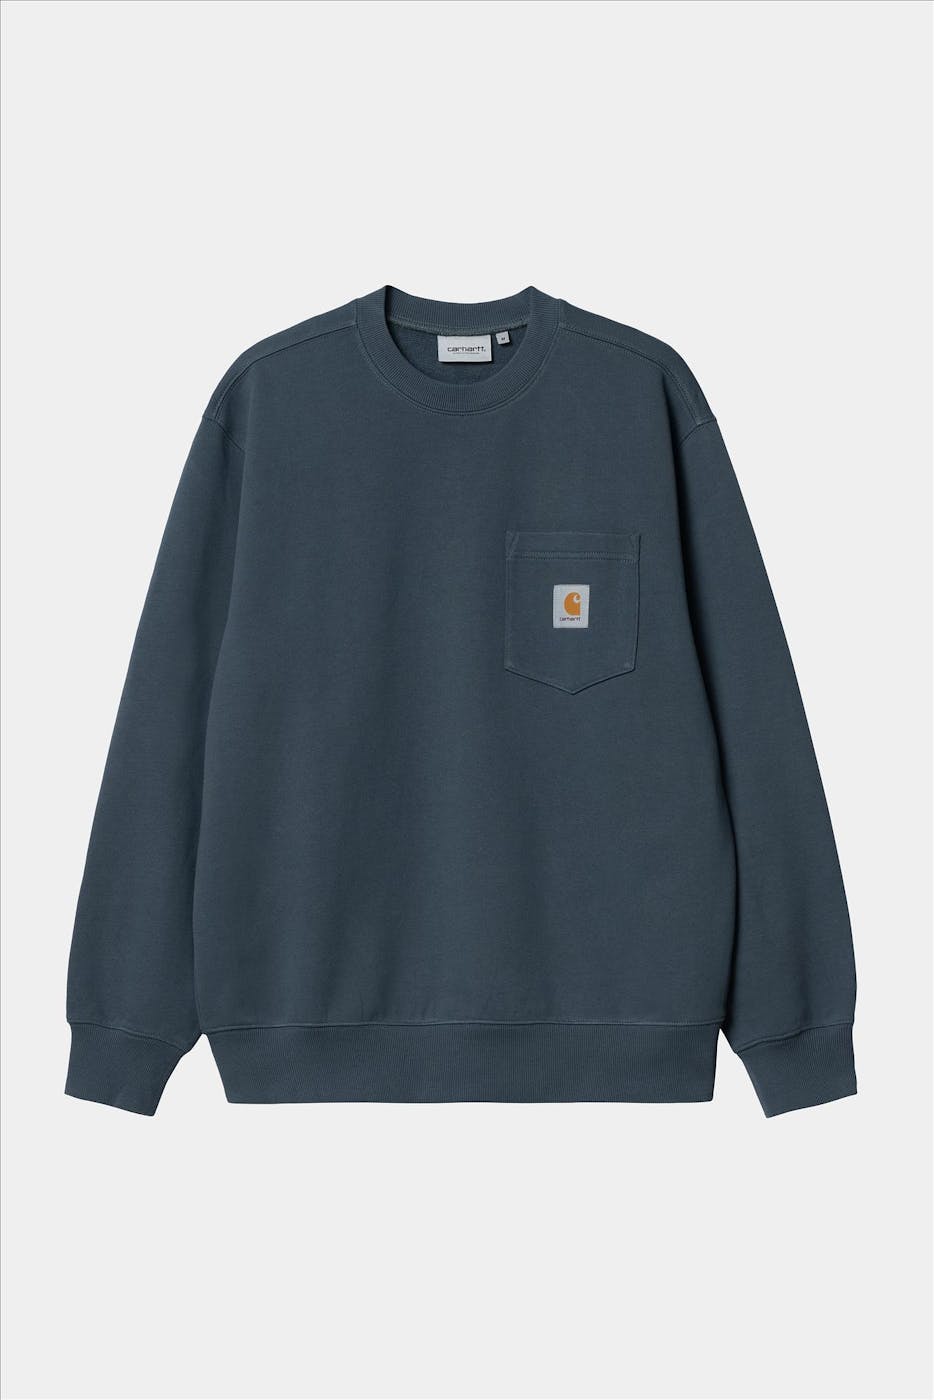 Carhartt WIP - Blauwgrijze Pocket sweater